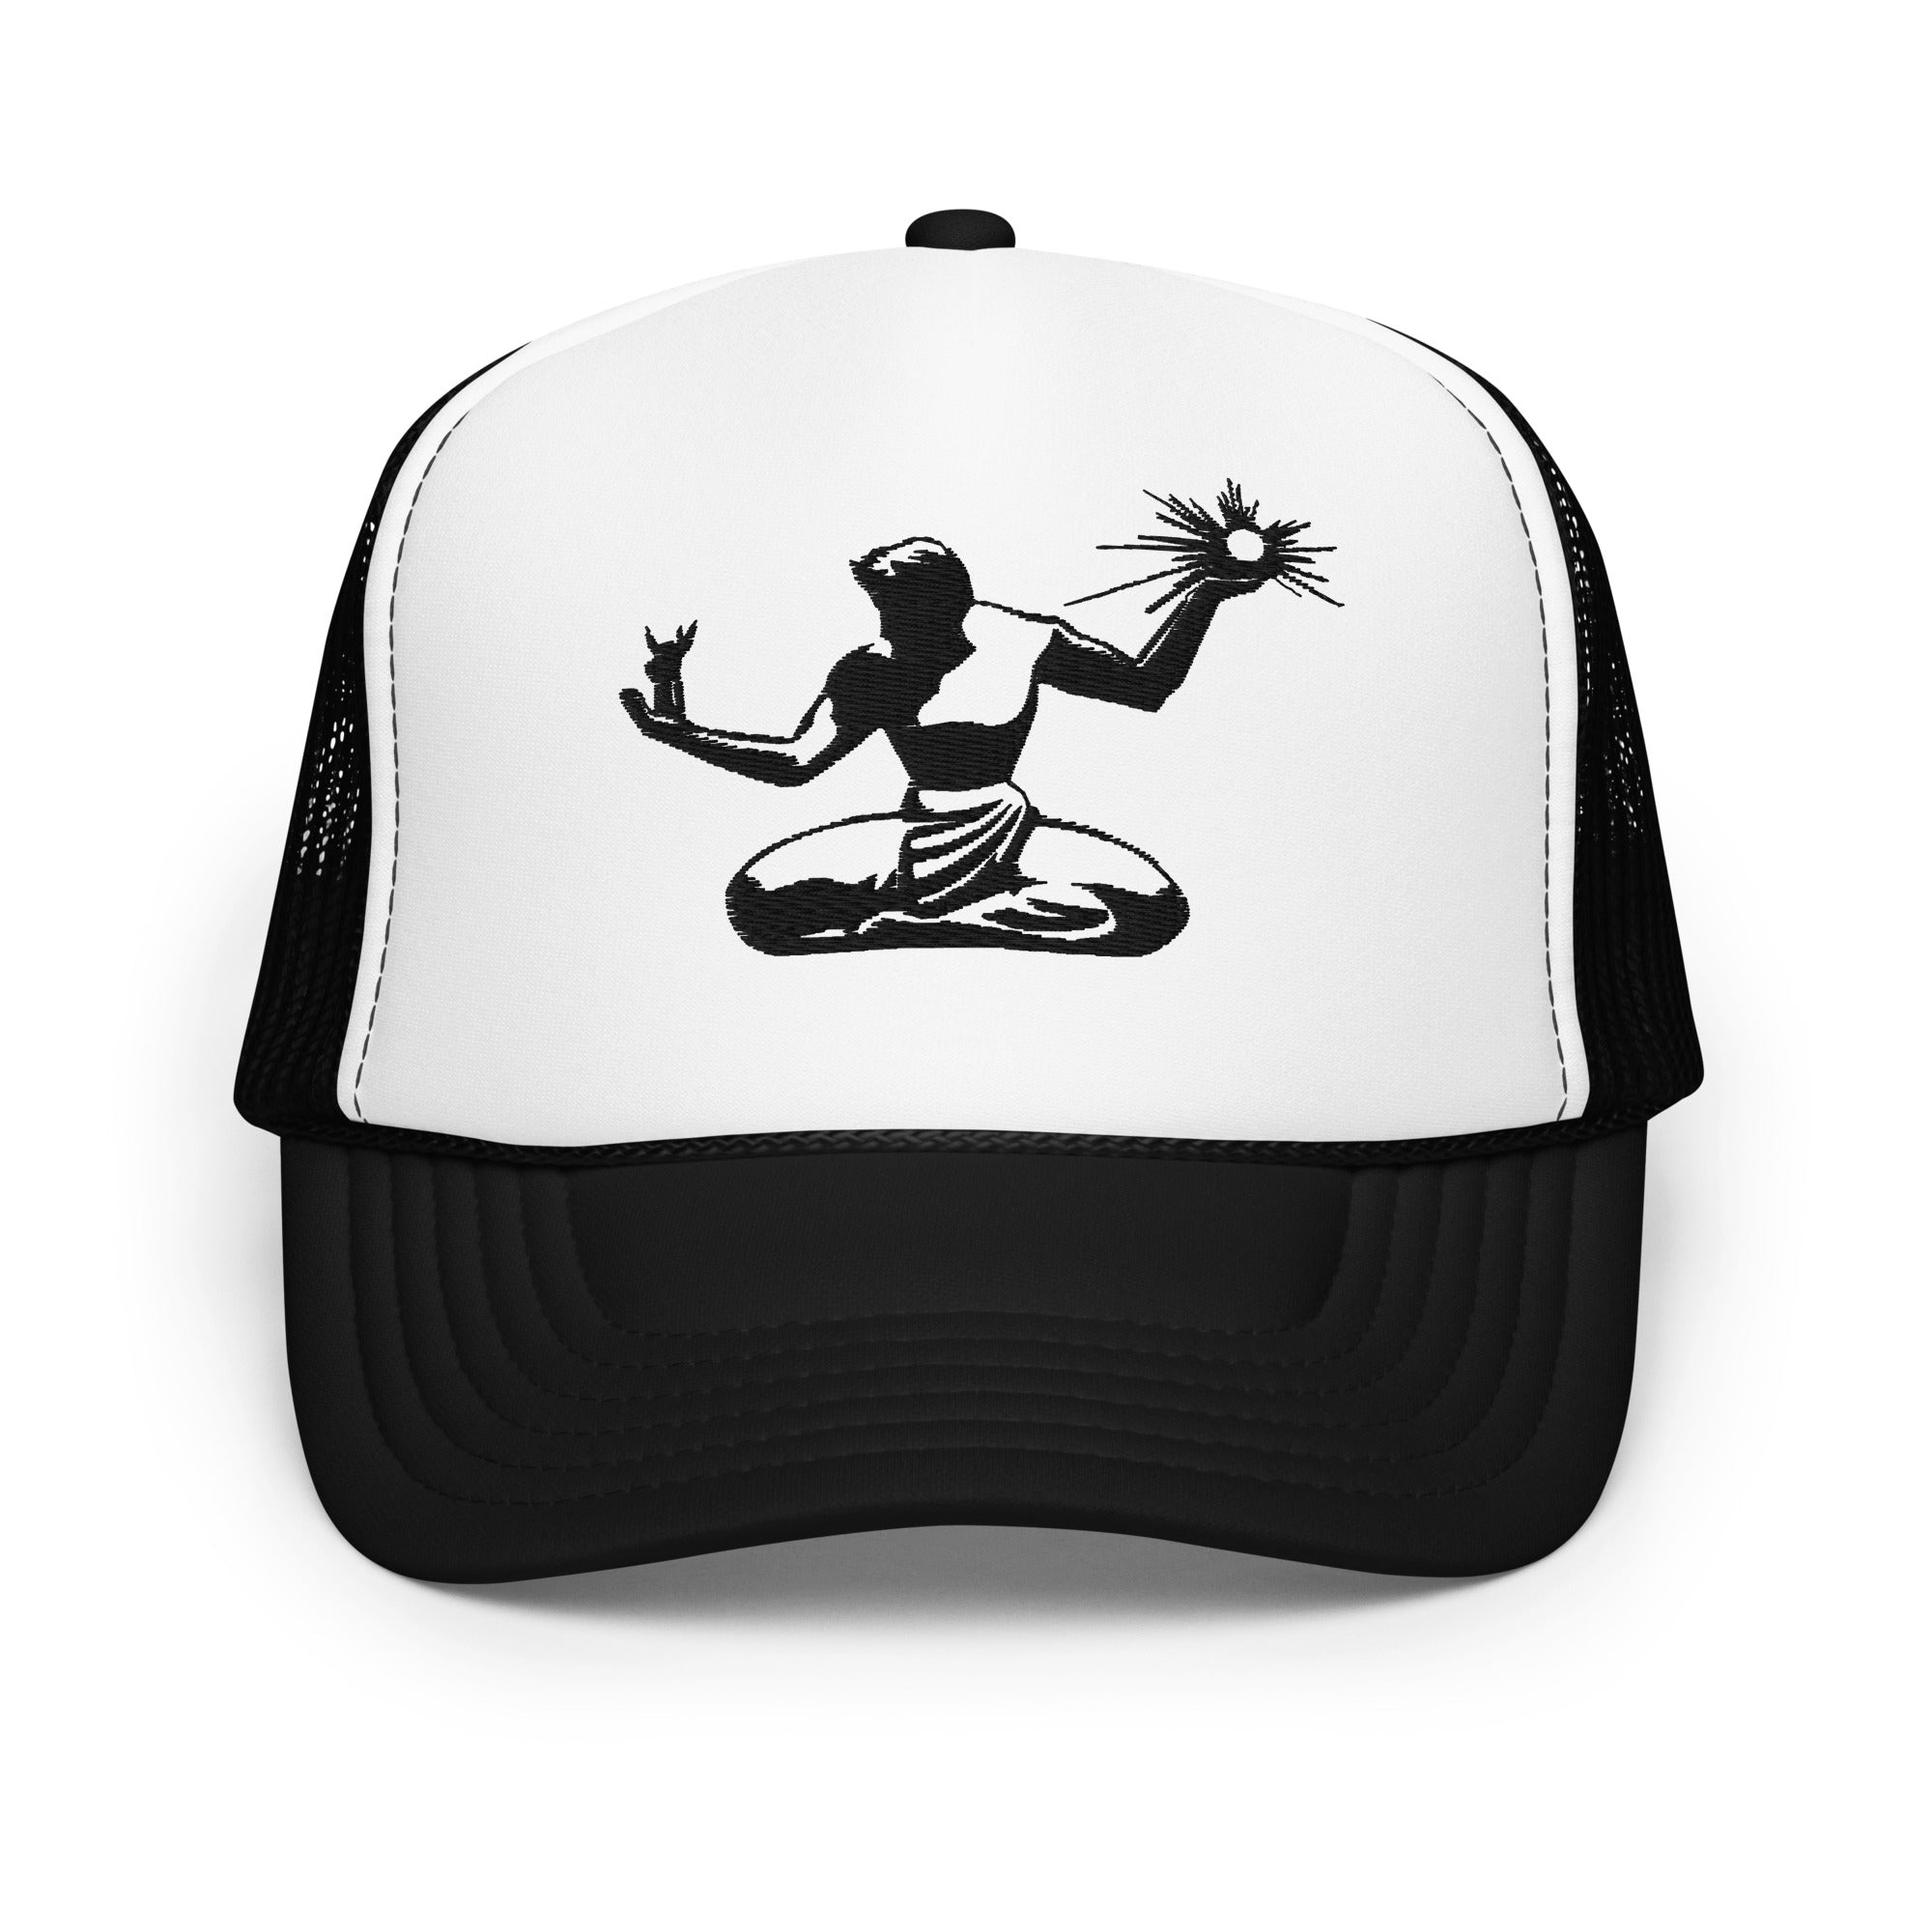 Spirit of Detroit Foam Trucker Hat - Embroidered - Black / White  Default Title  